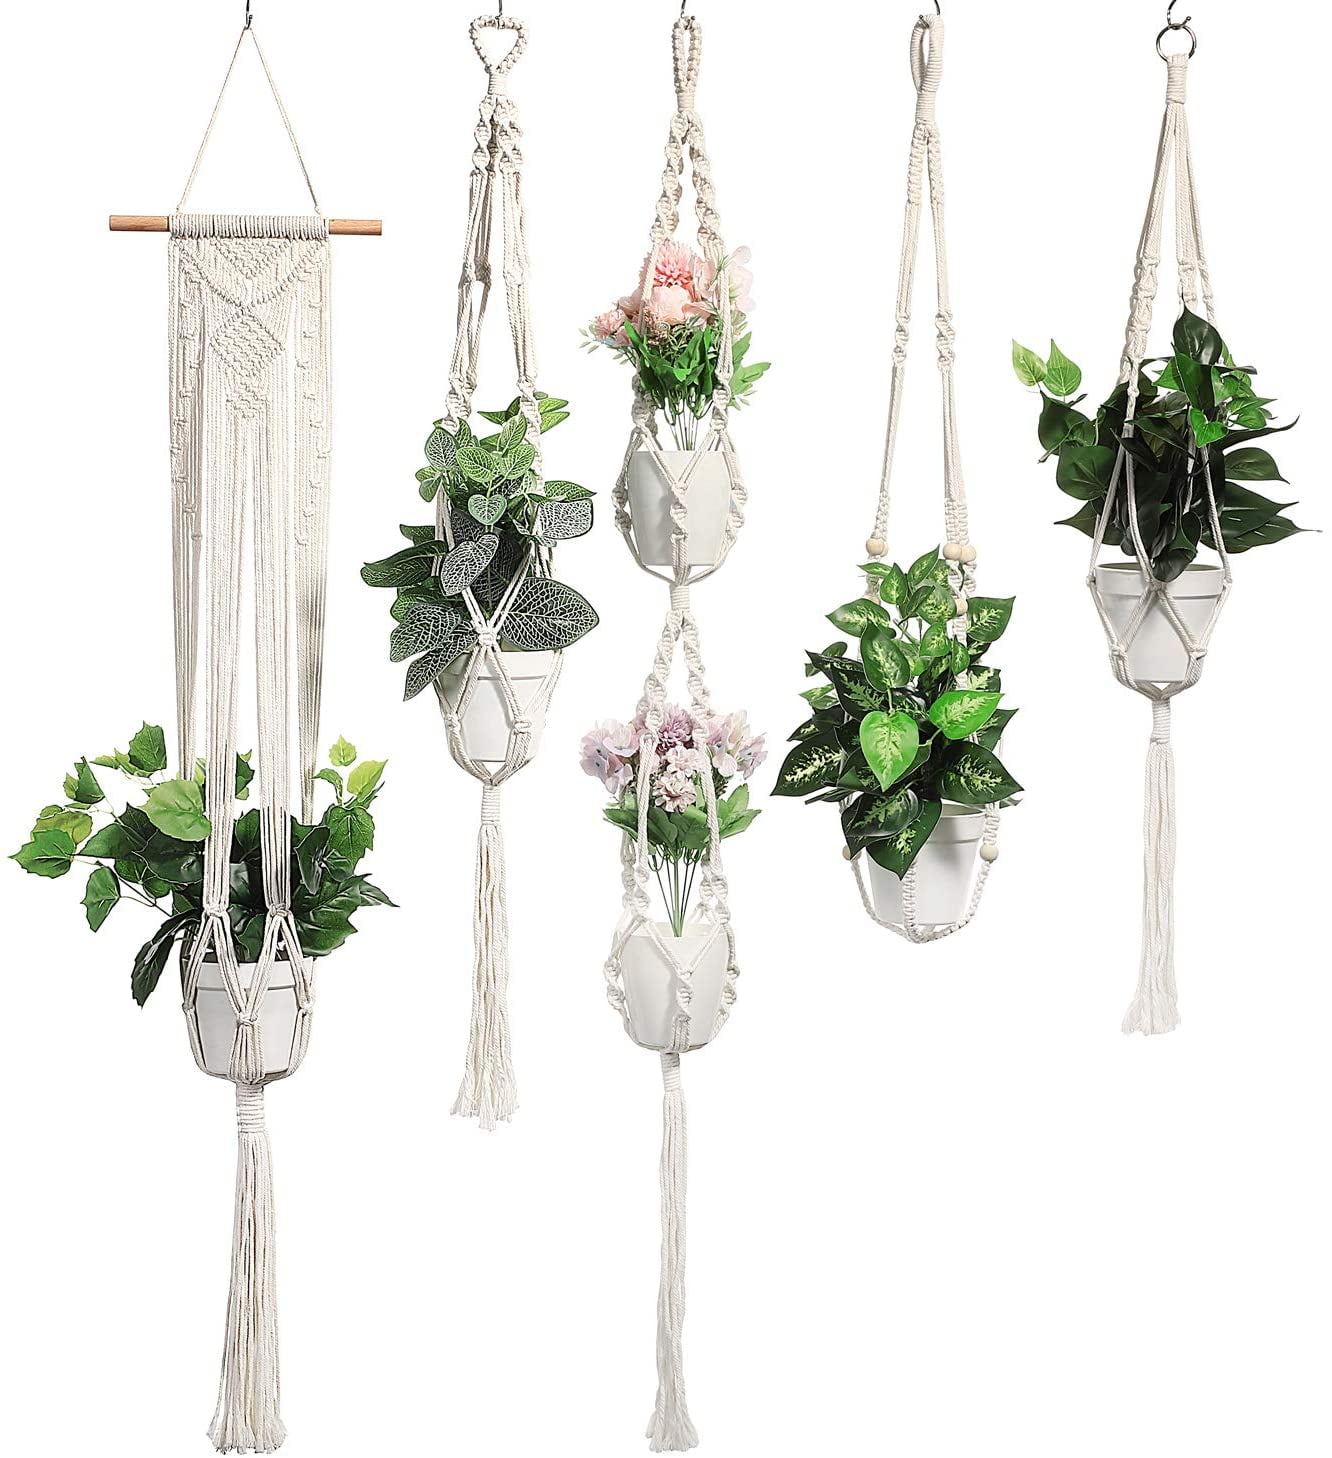 Forart Macrame Plant Hangers Indoor Wall Hanging Planter Basket Flower Pot Holder Boho Home Decor Gift Not Include Plant